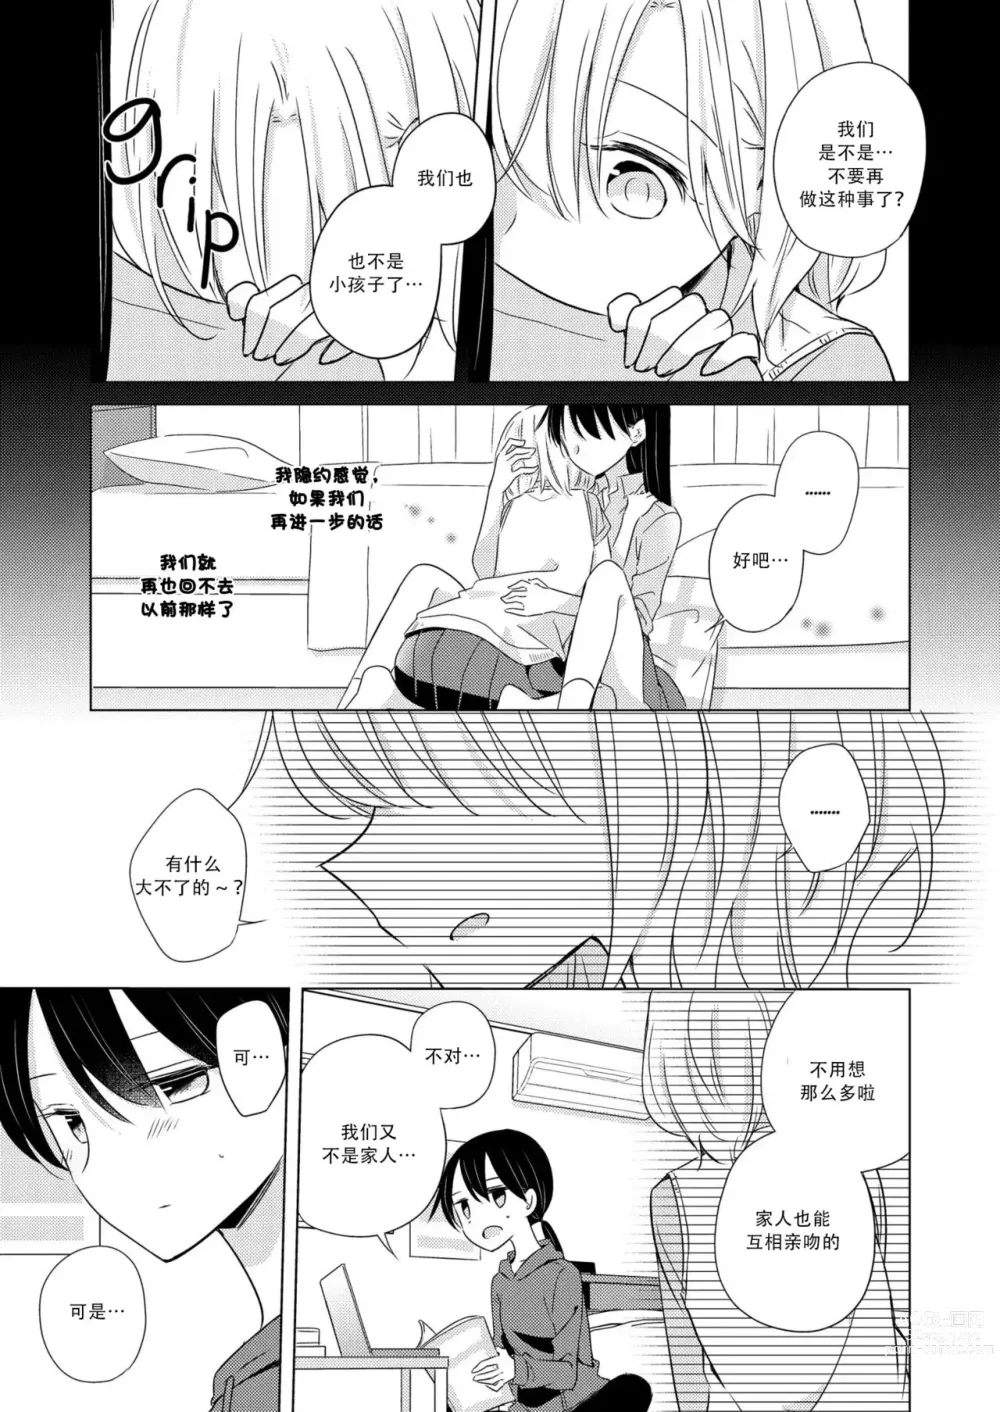 Page 9 of doujinshi 等我长大之后